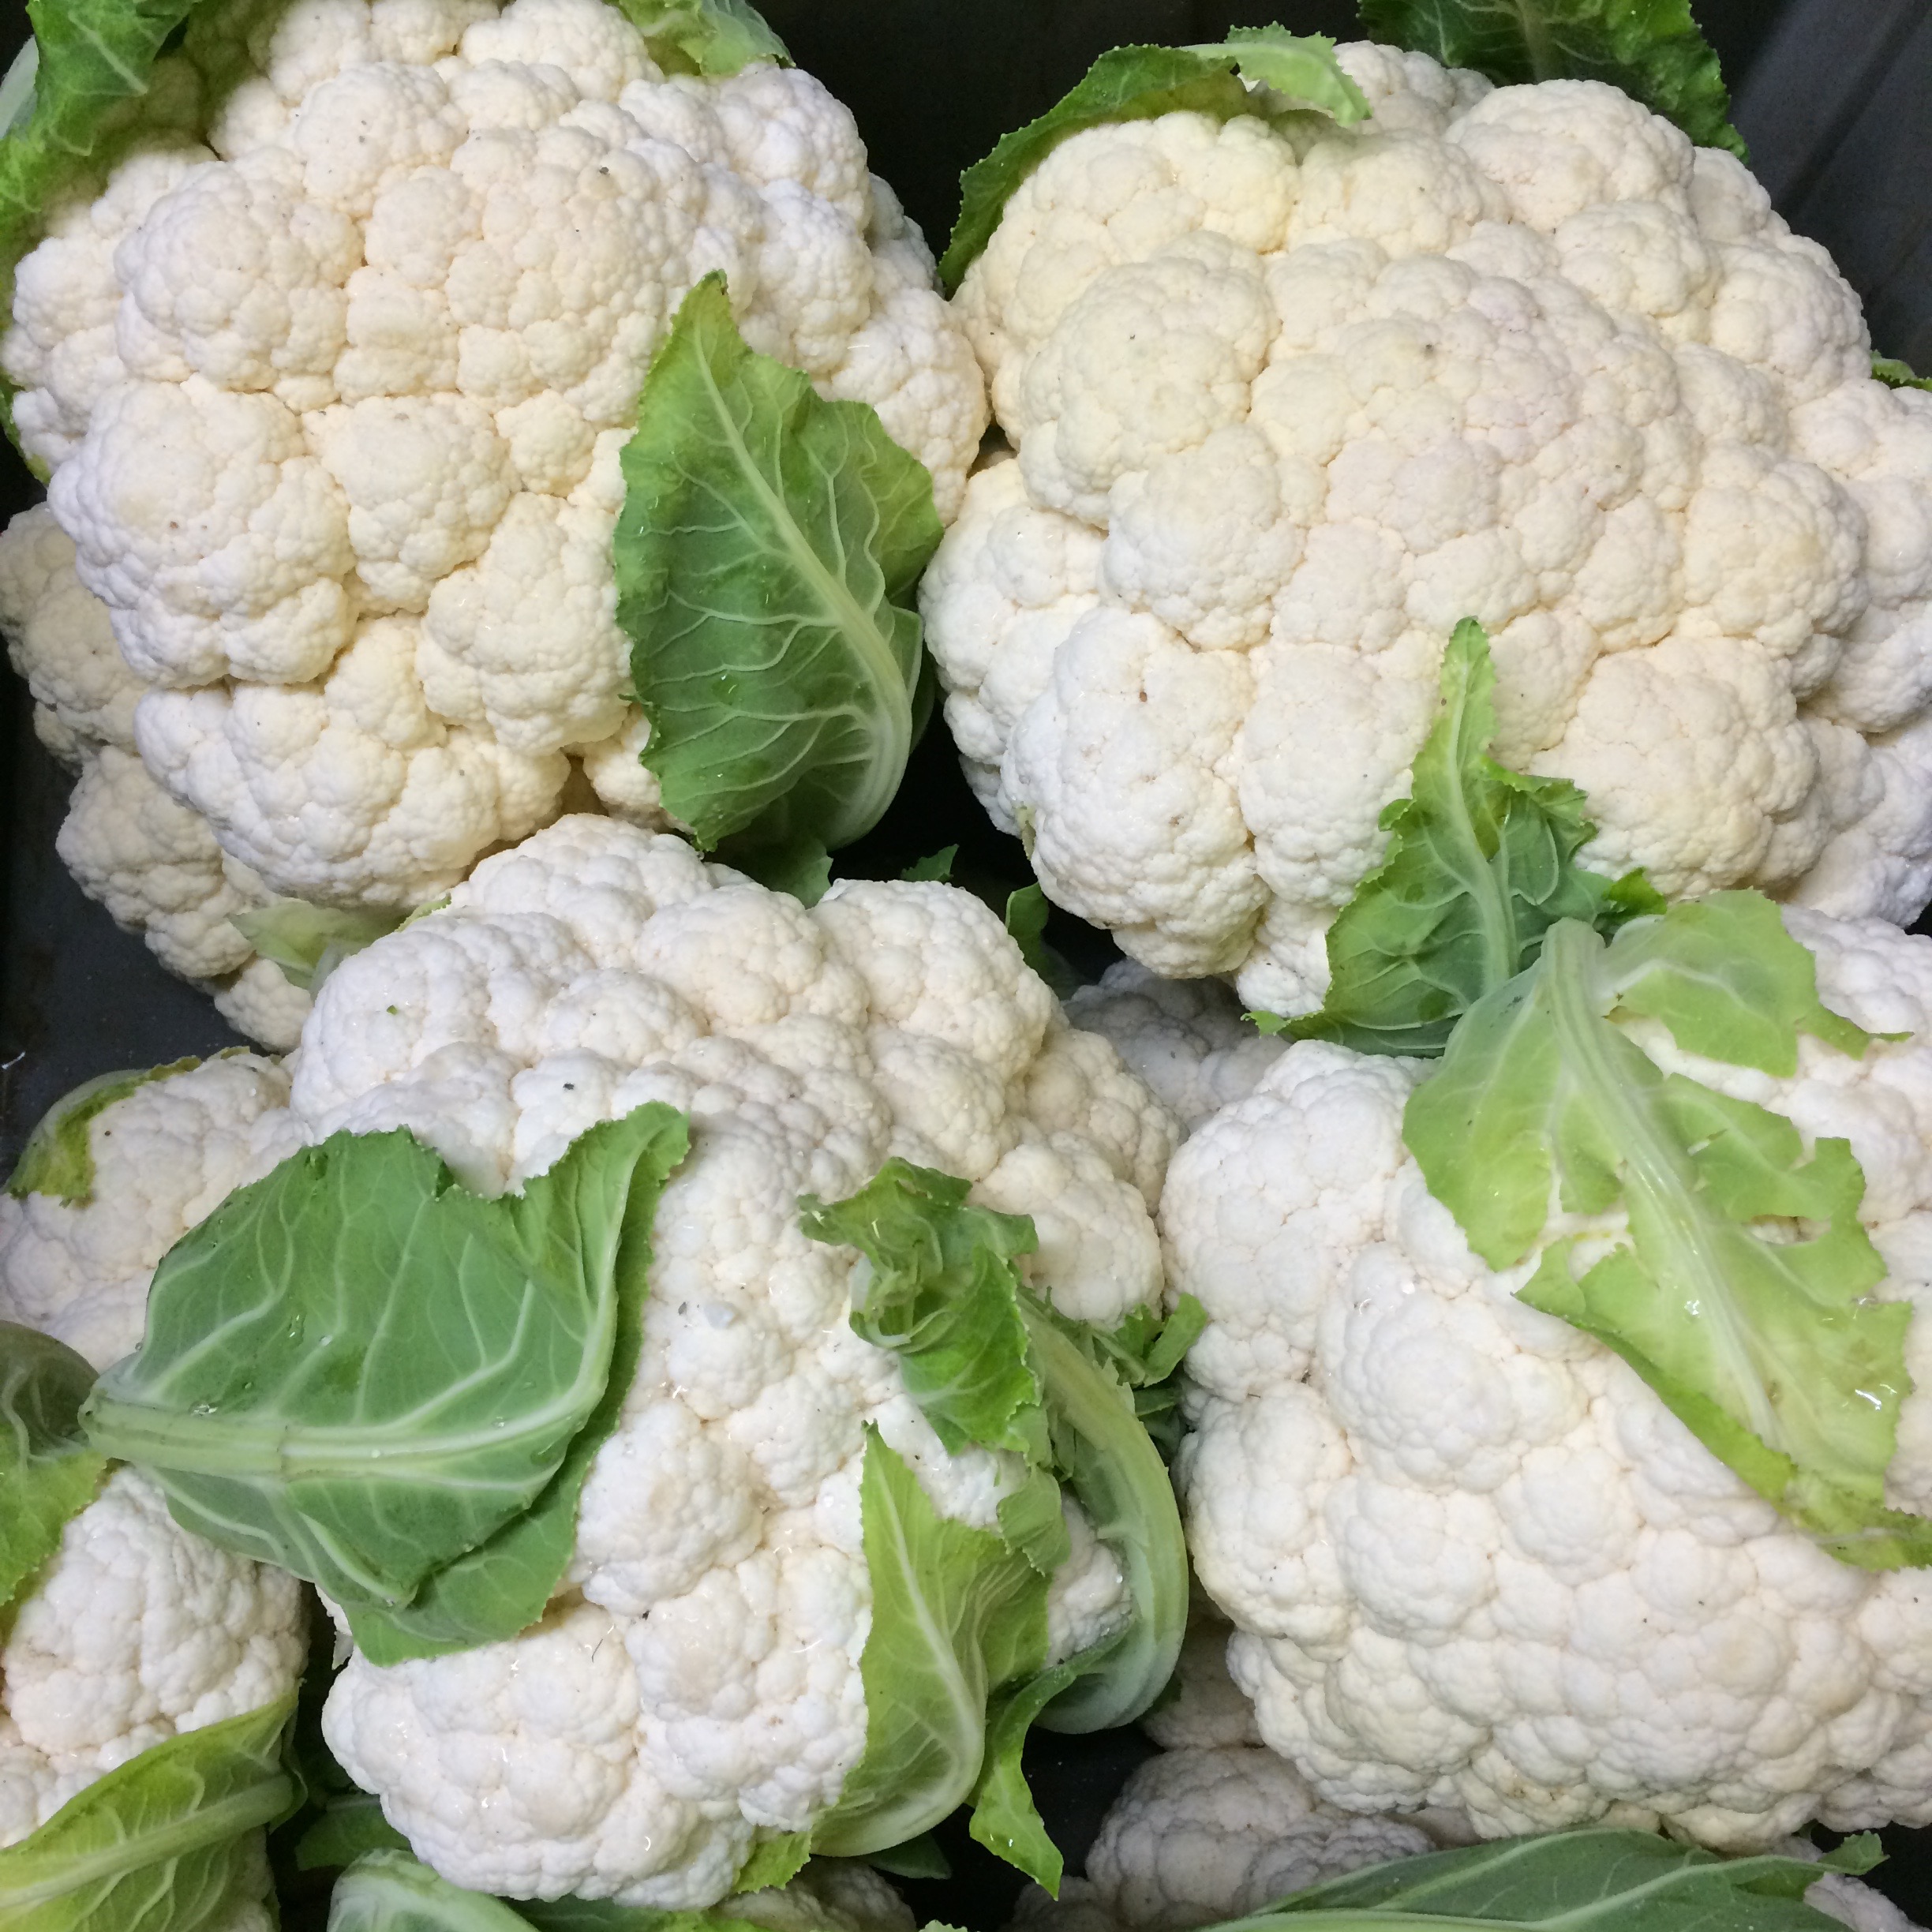 helsing junction farms csa cauliflower pile